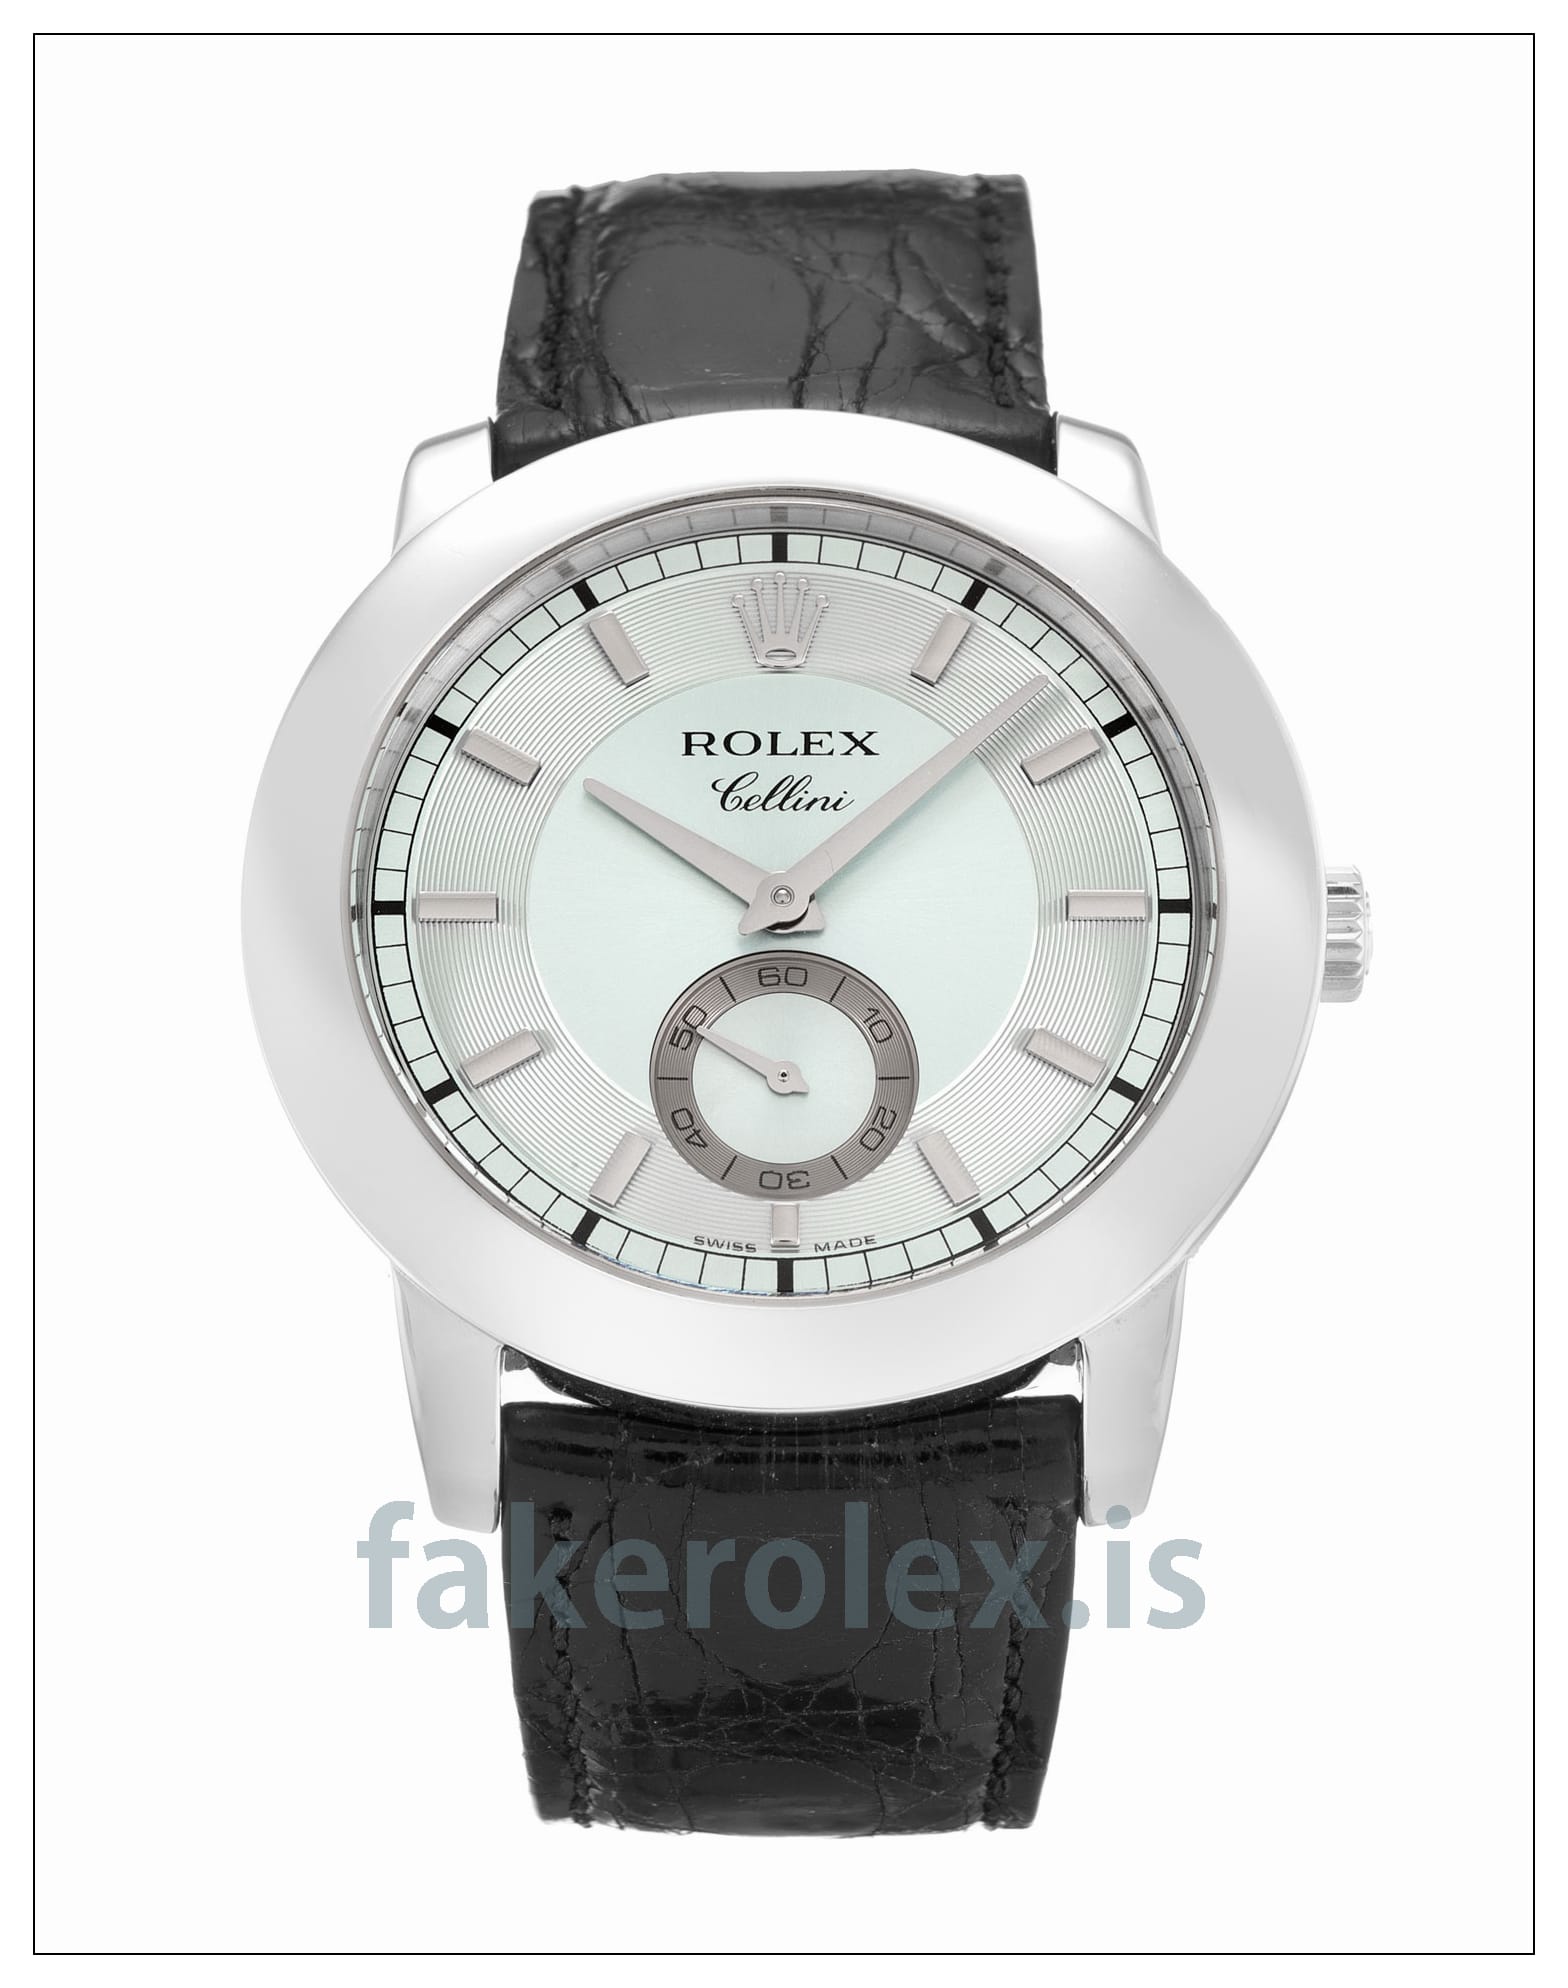 Rolex Cellini 5241/6 - Fake Rolex